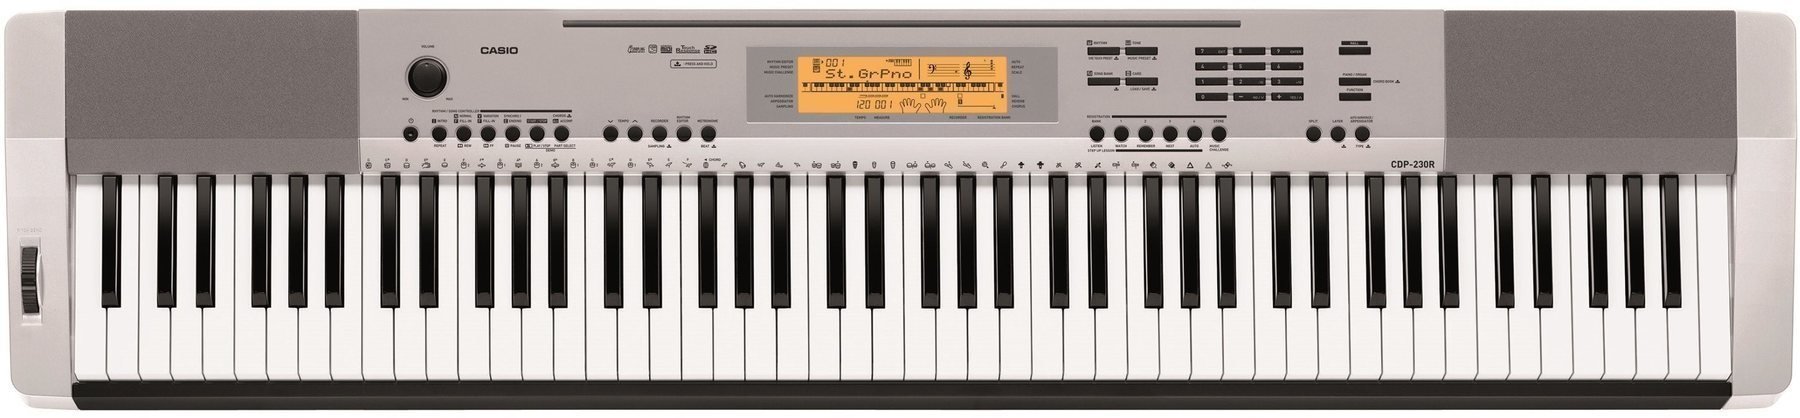 Дигитално Stage пиано Casio CDP 230R SR